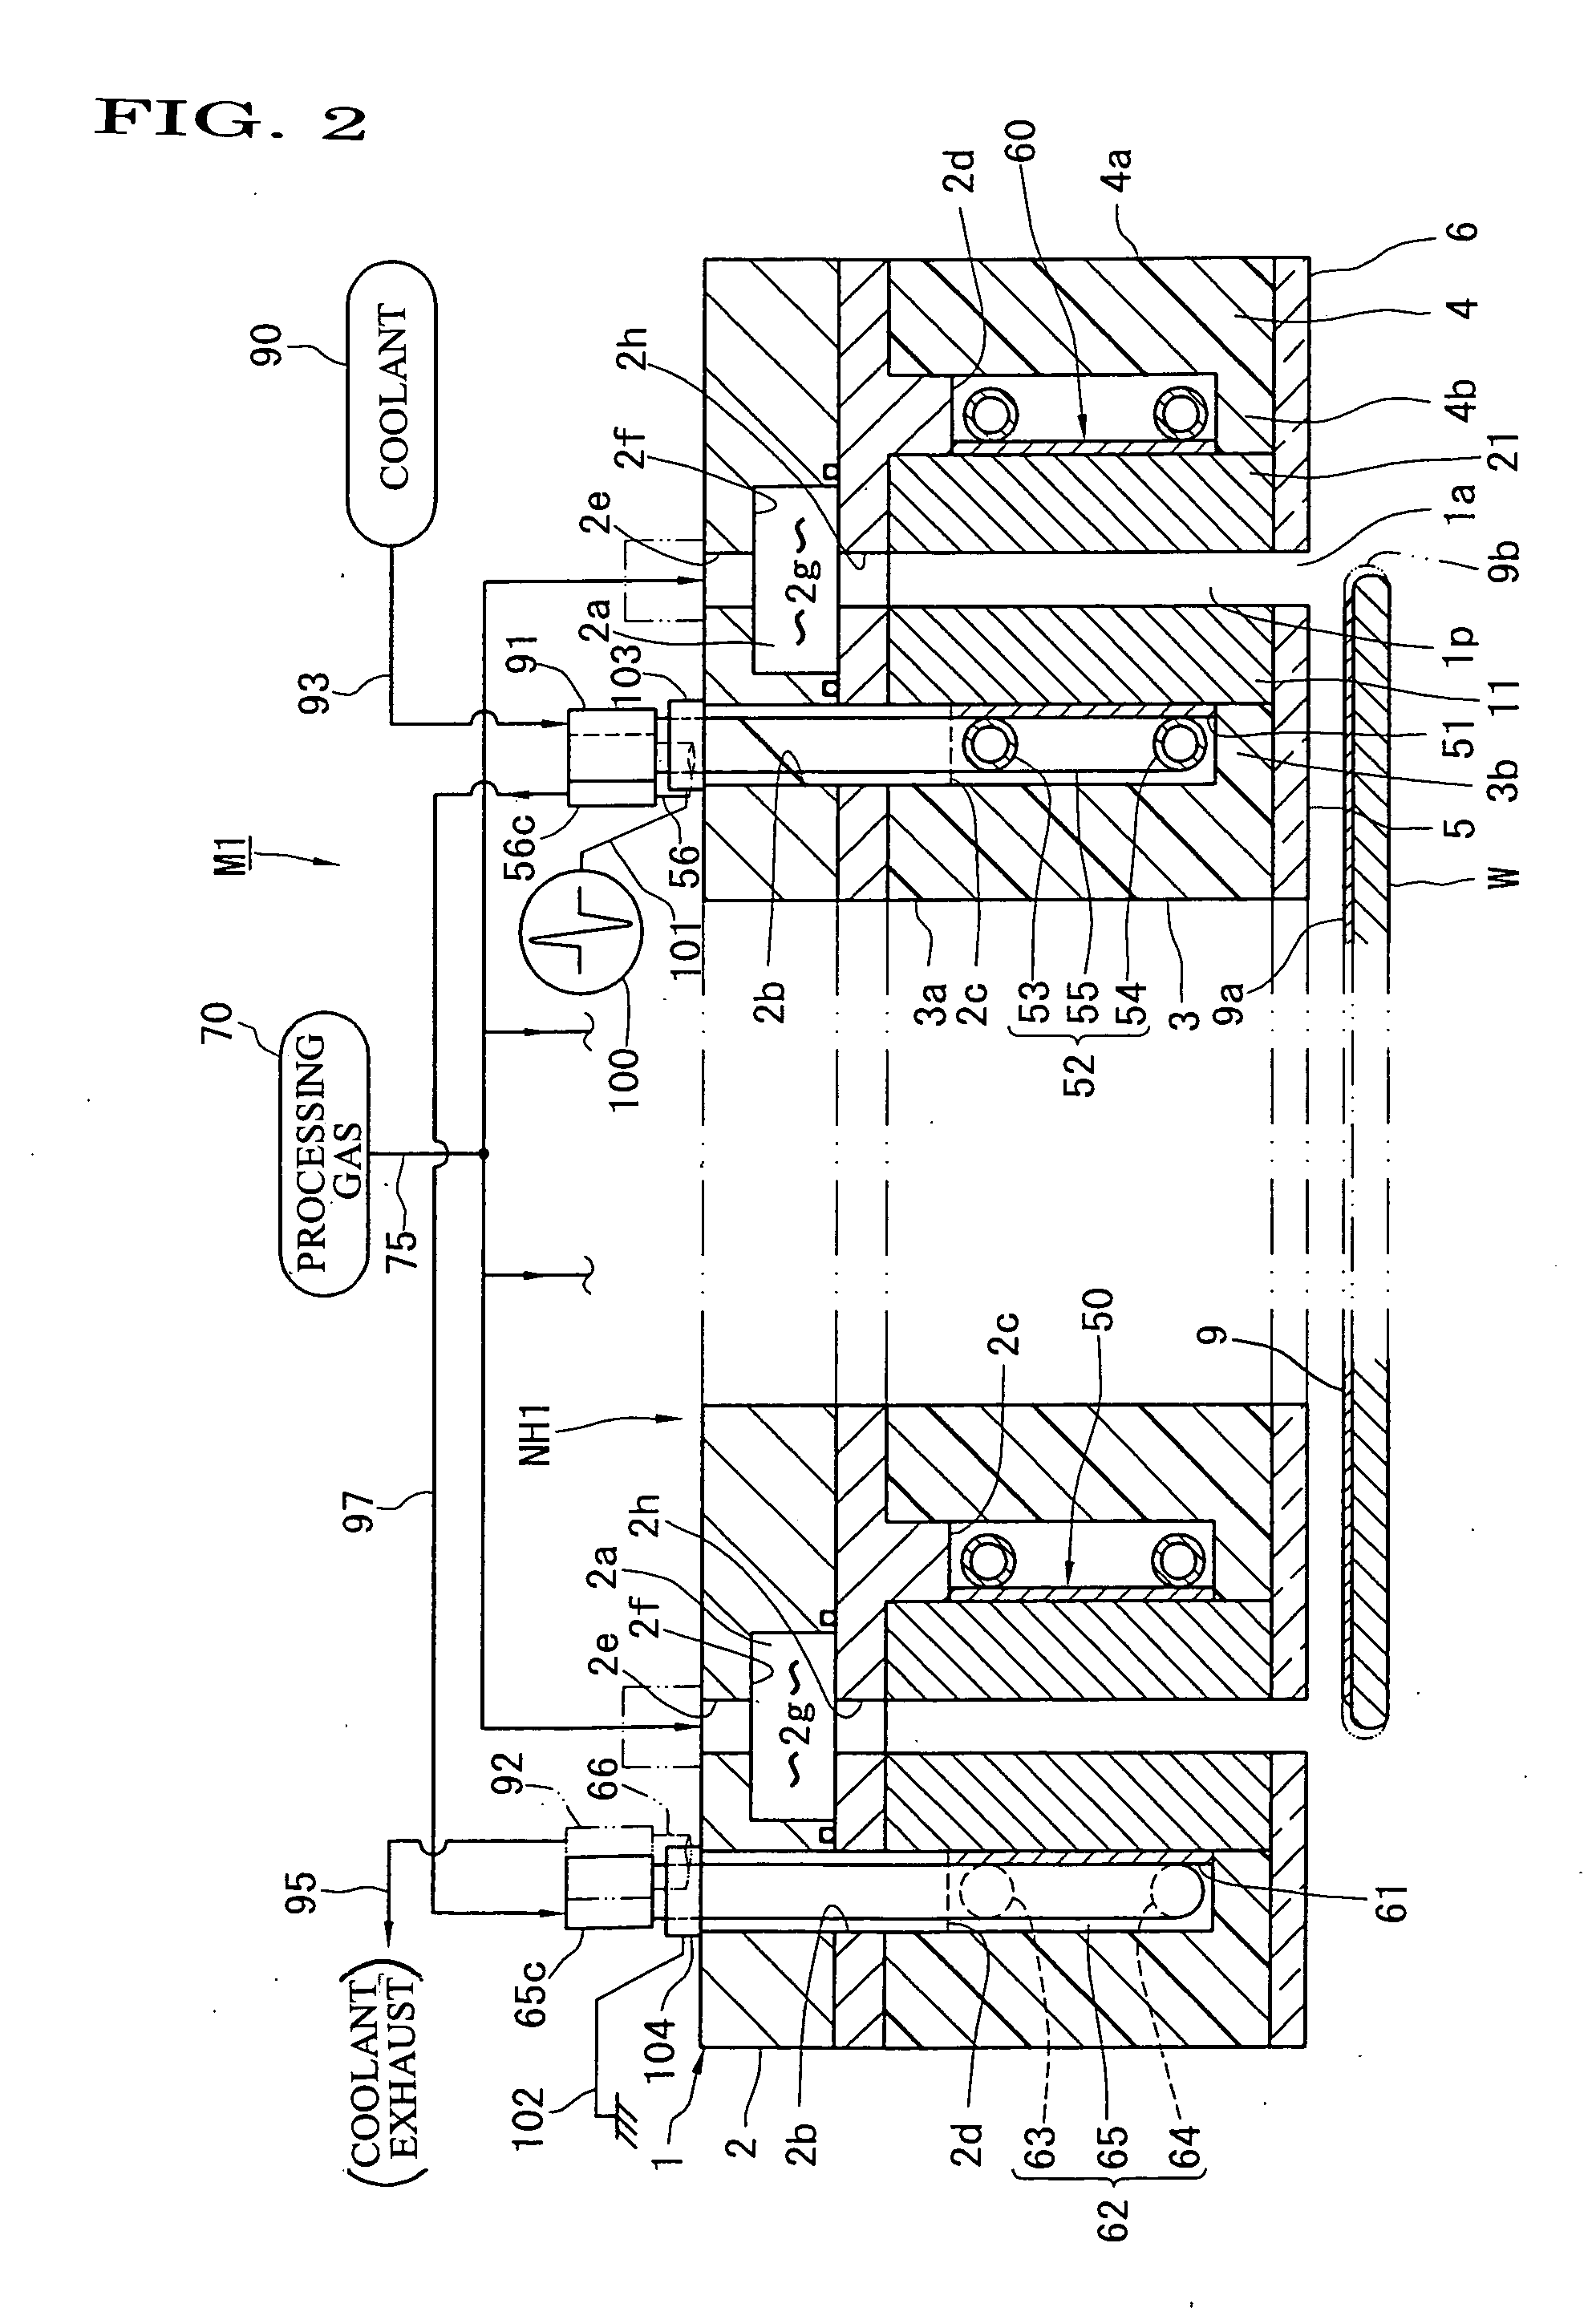 Plasma processing apparatus and method